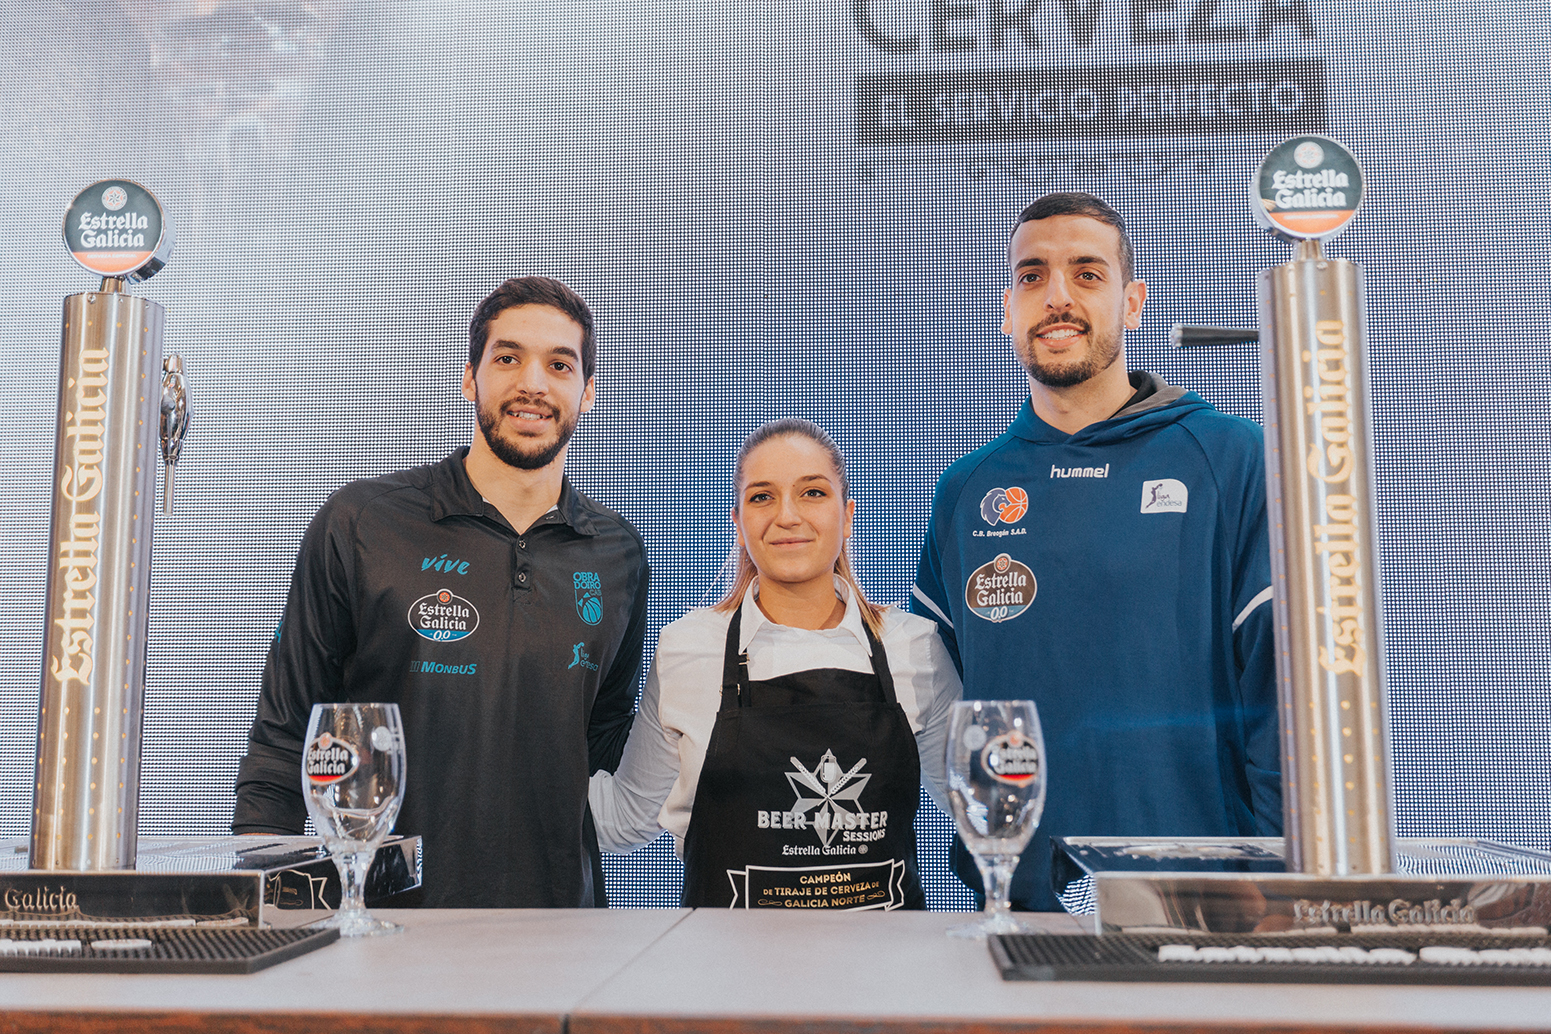 Ganadora campeonato de tiraje de cerveza estrella galicia - galicia norte